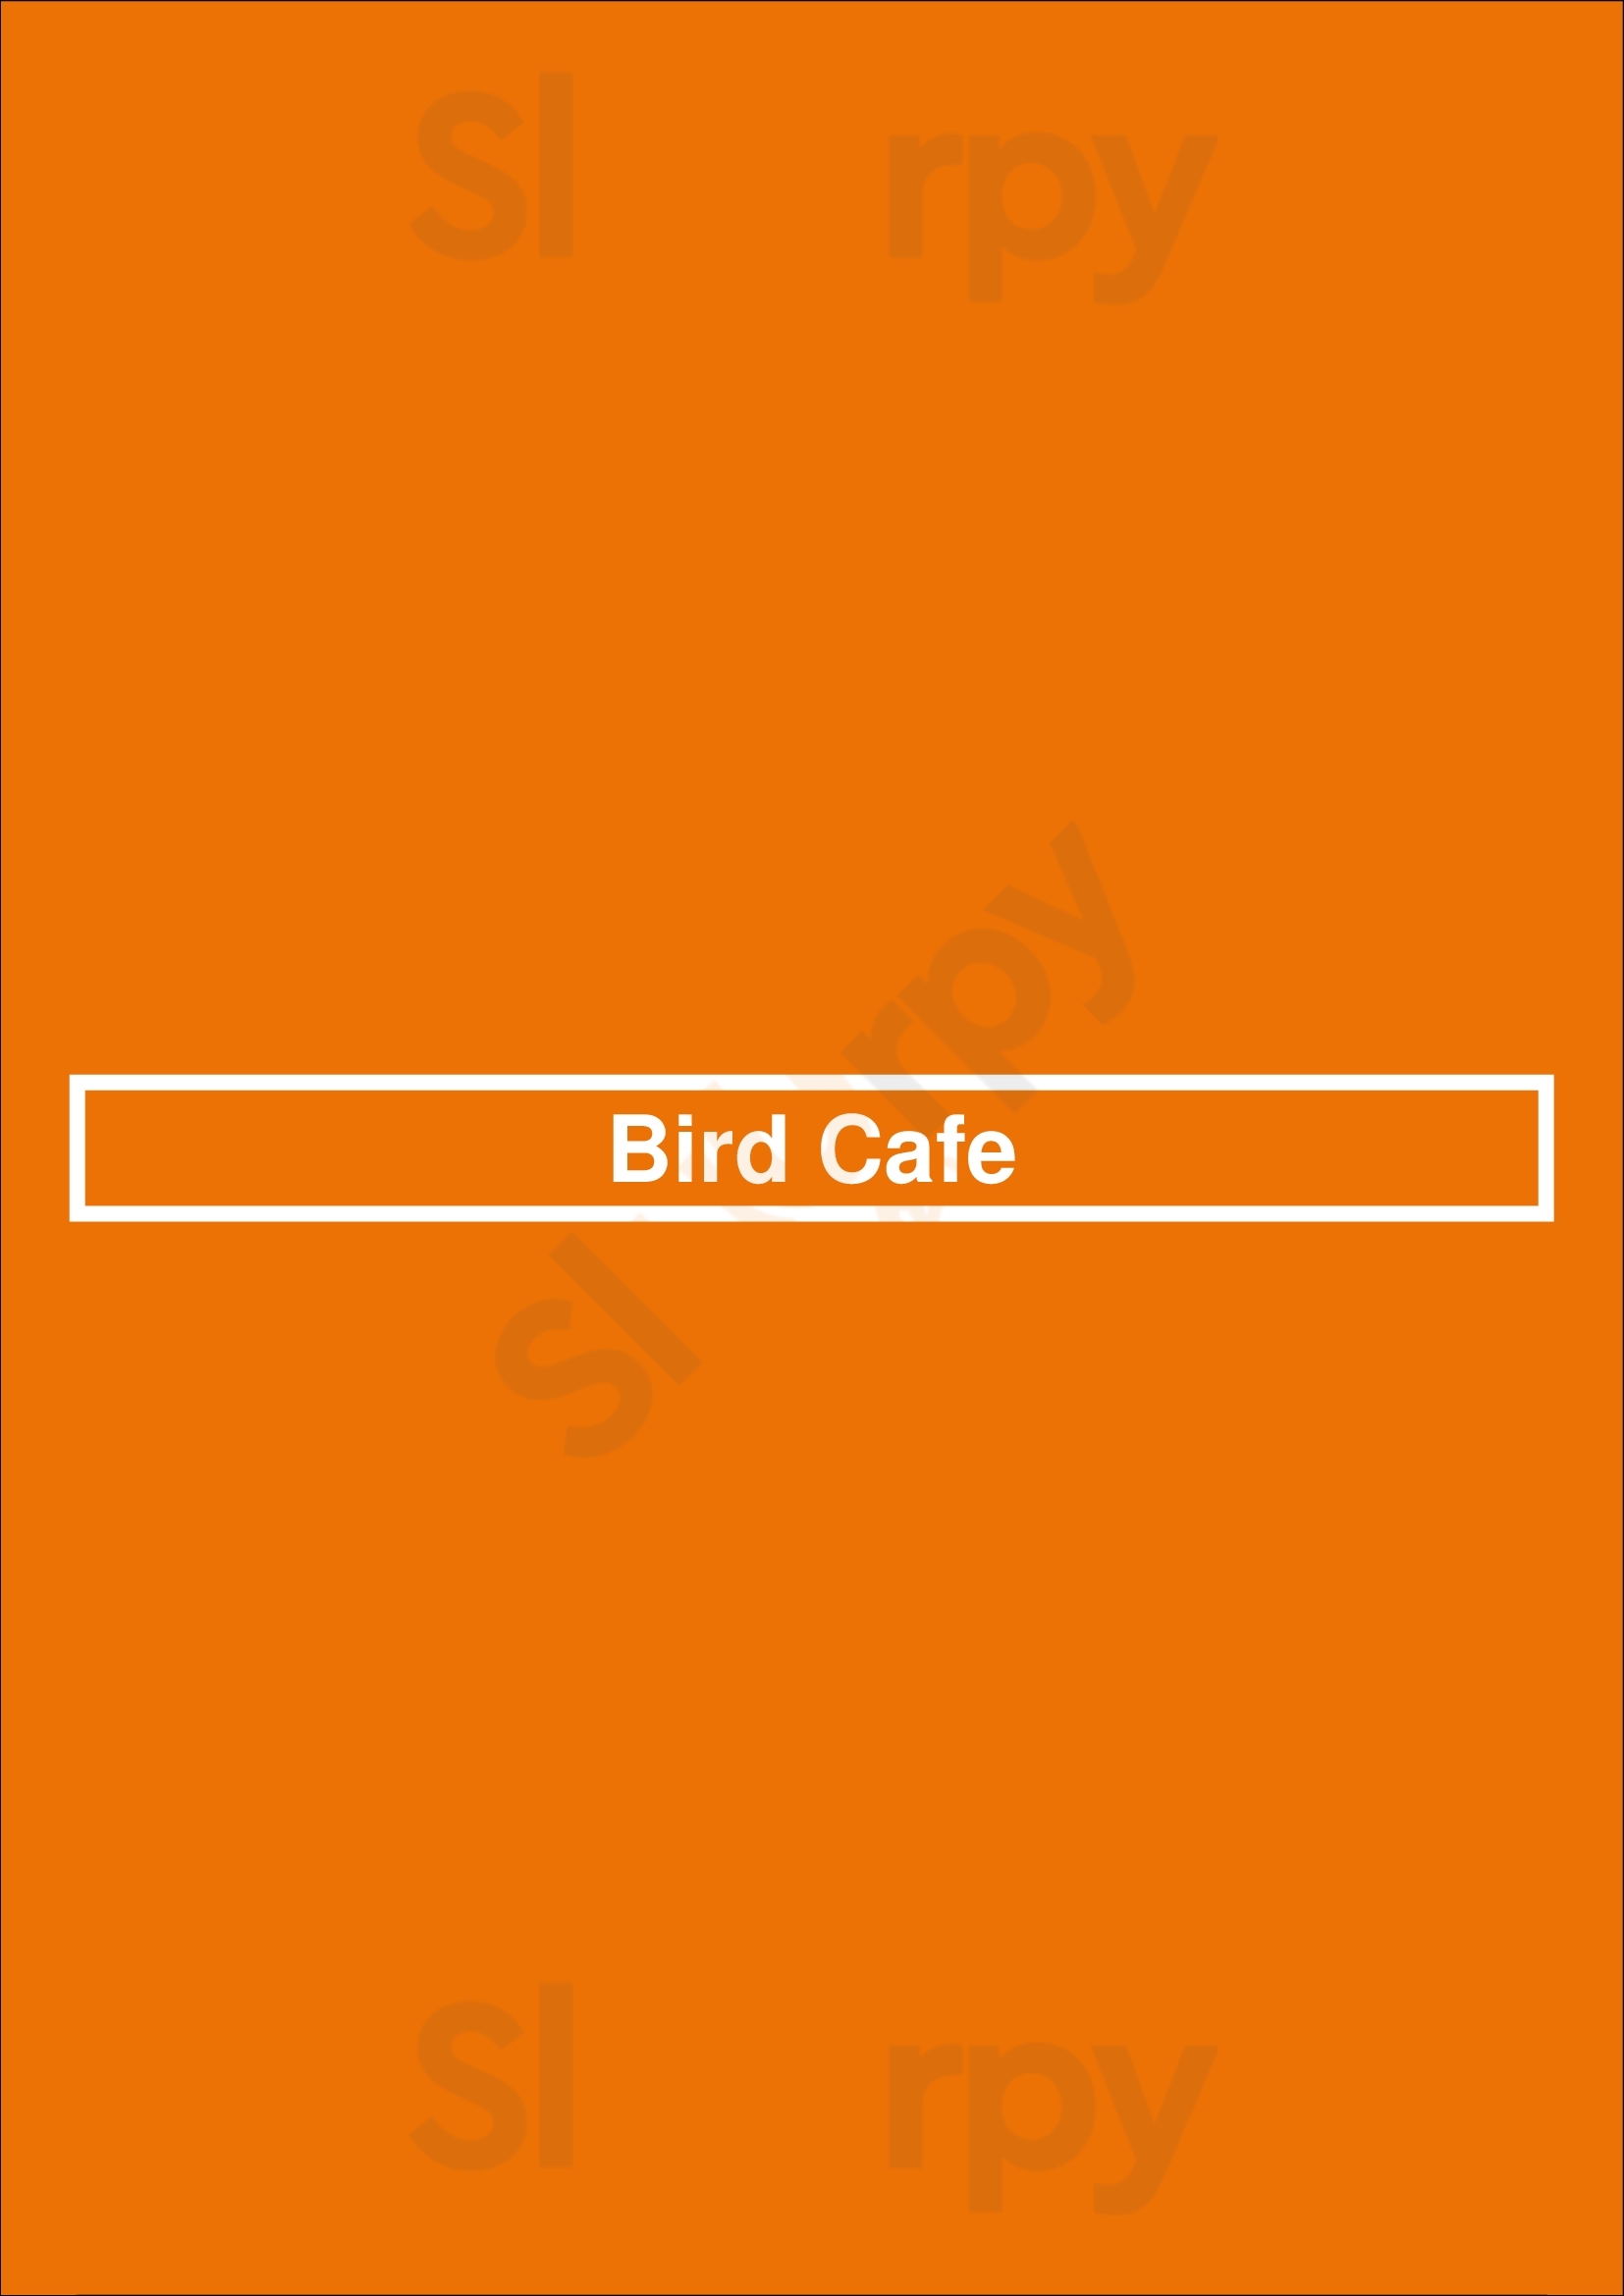 Bird Cafe Fort Worth Menu - 1